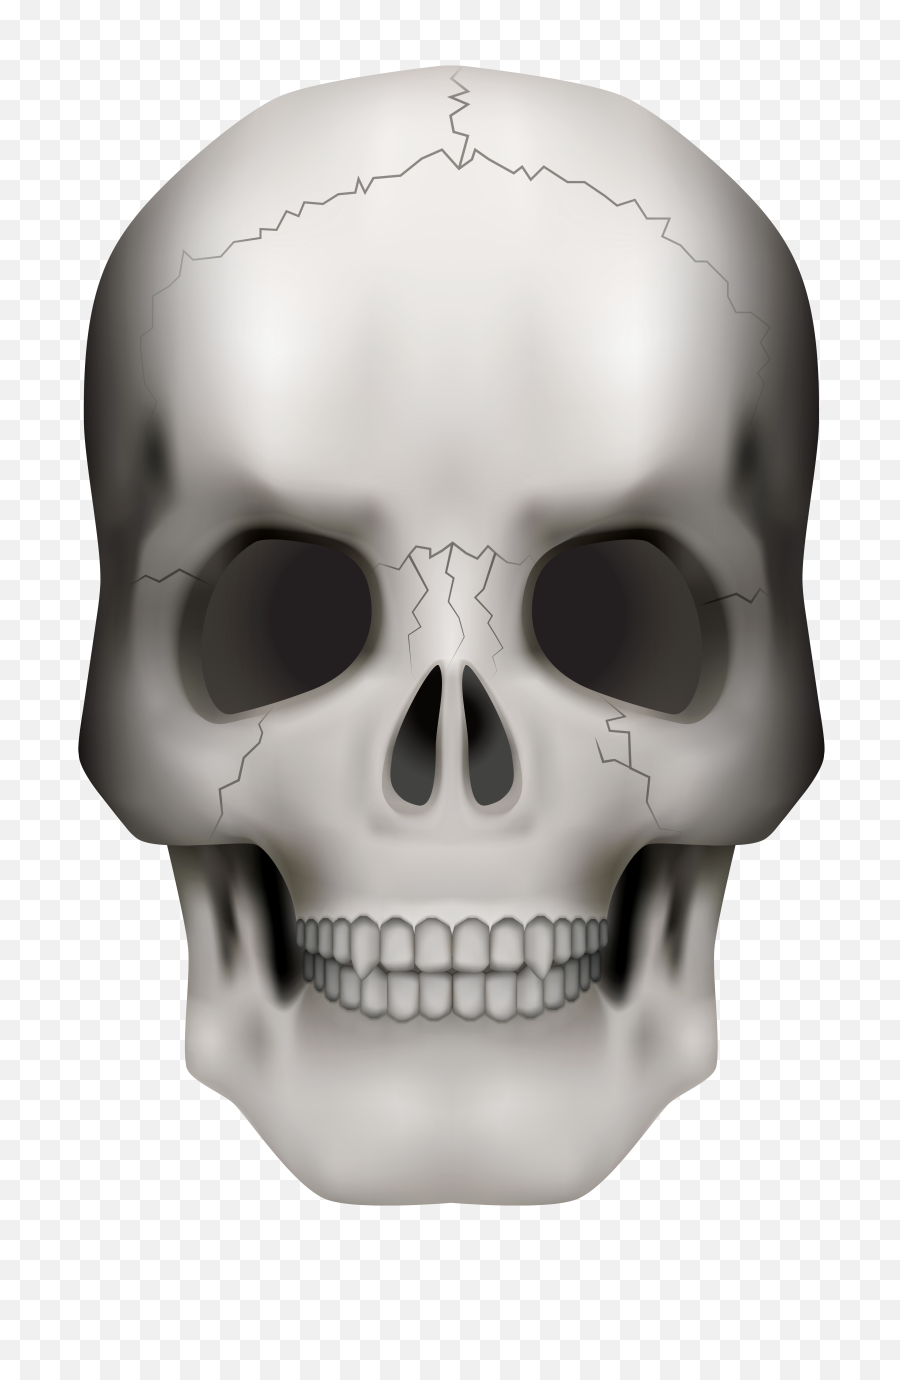 Skull Png Images Free Download - Transparent Background Skull In Png,Skull And Bones Png